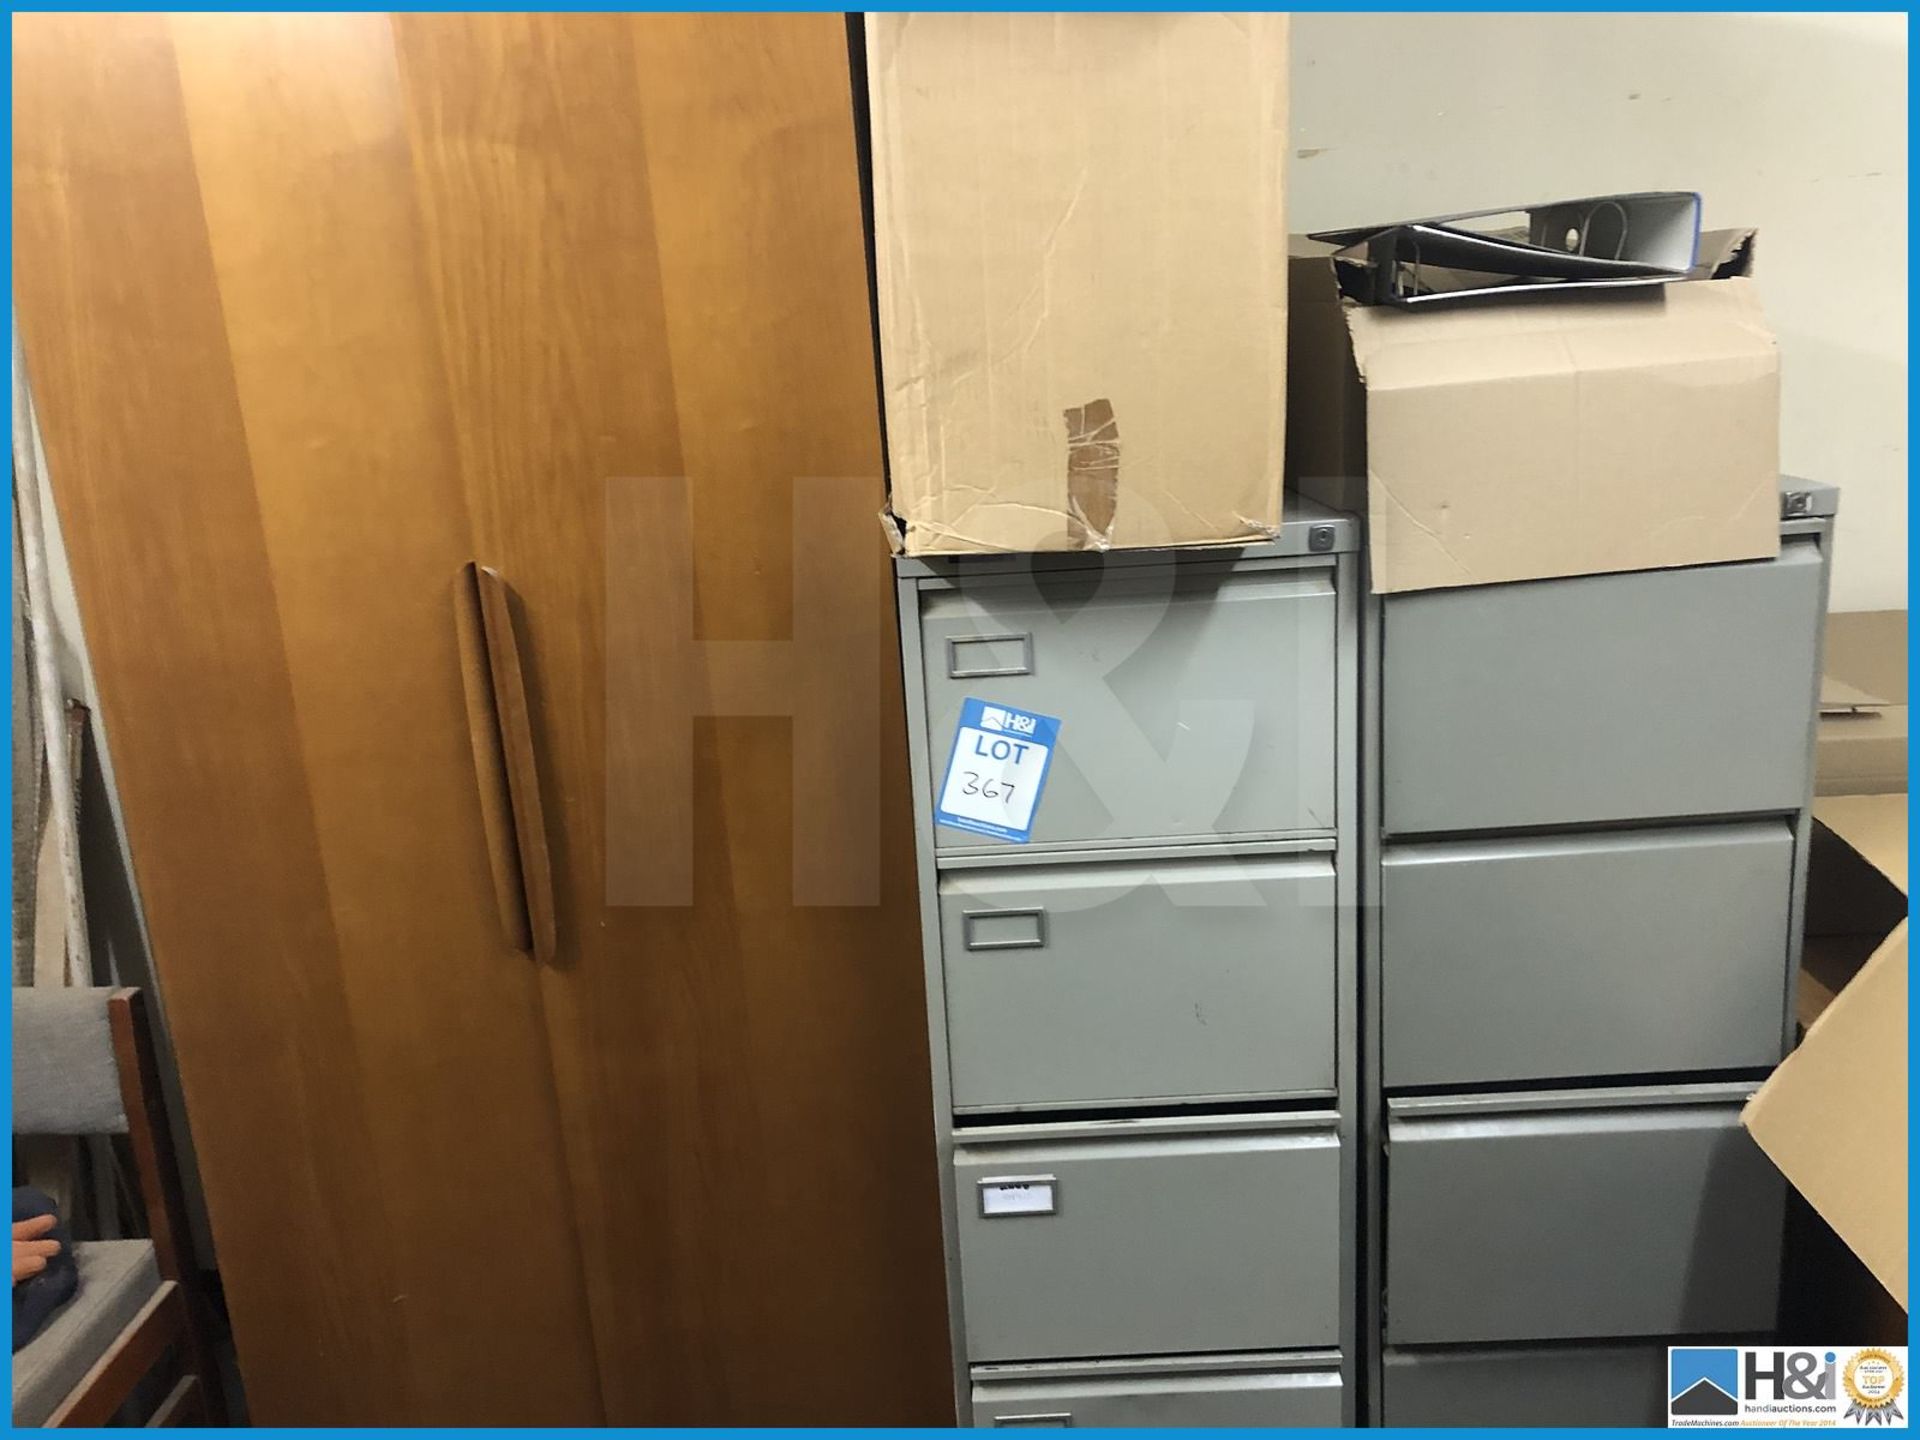 2 X metal filing cabinets